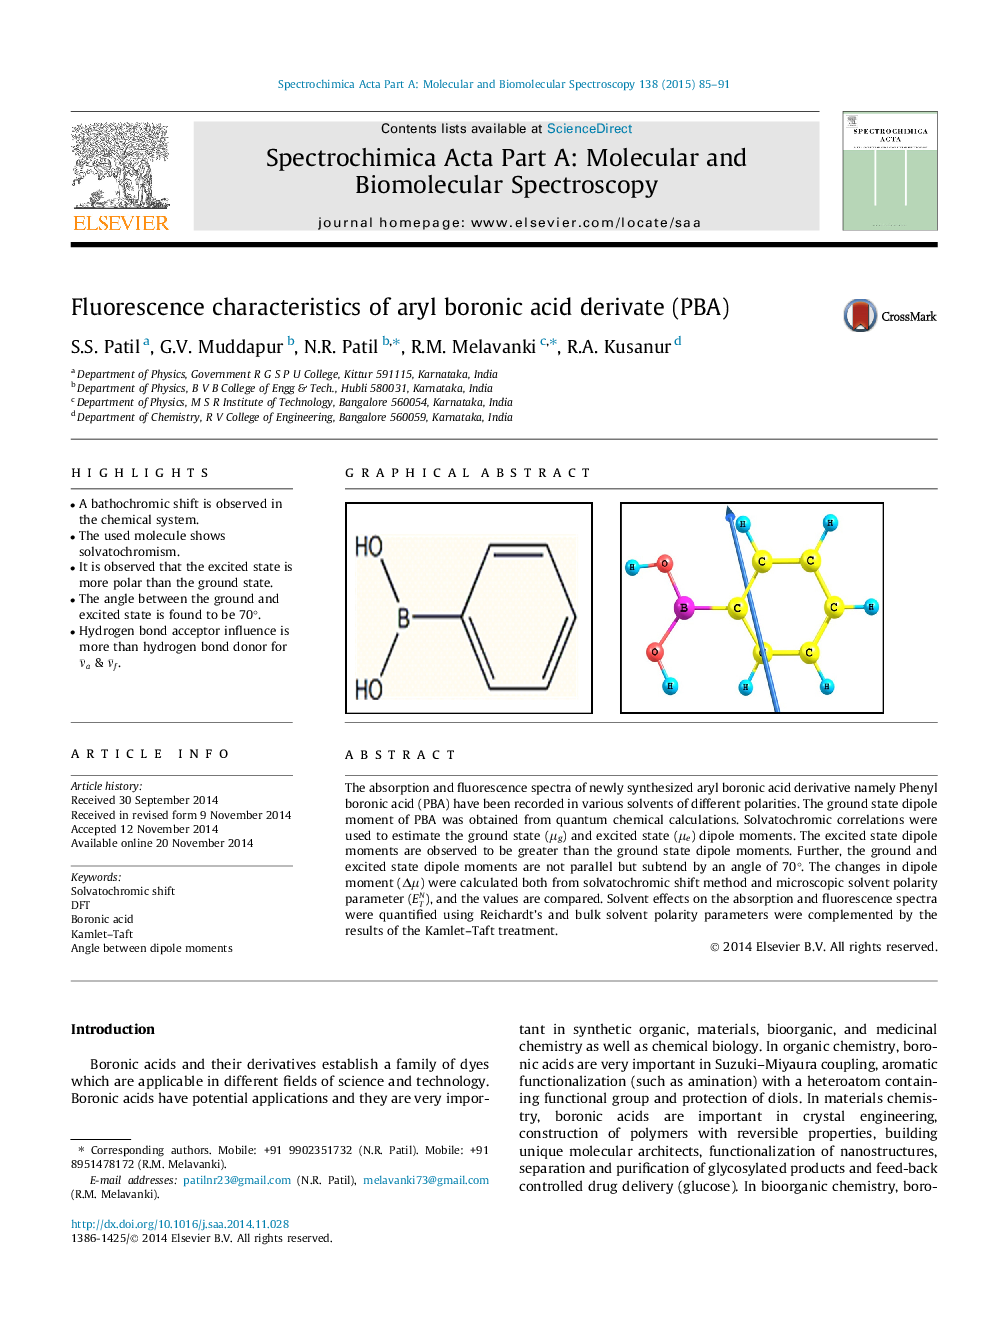 Fluorescence characteristics of aryl boronic acid derivate (PBA)